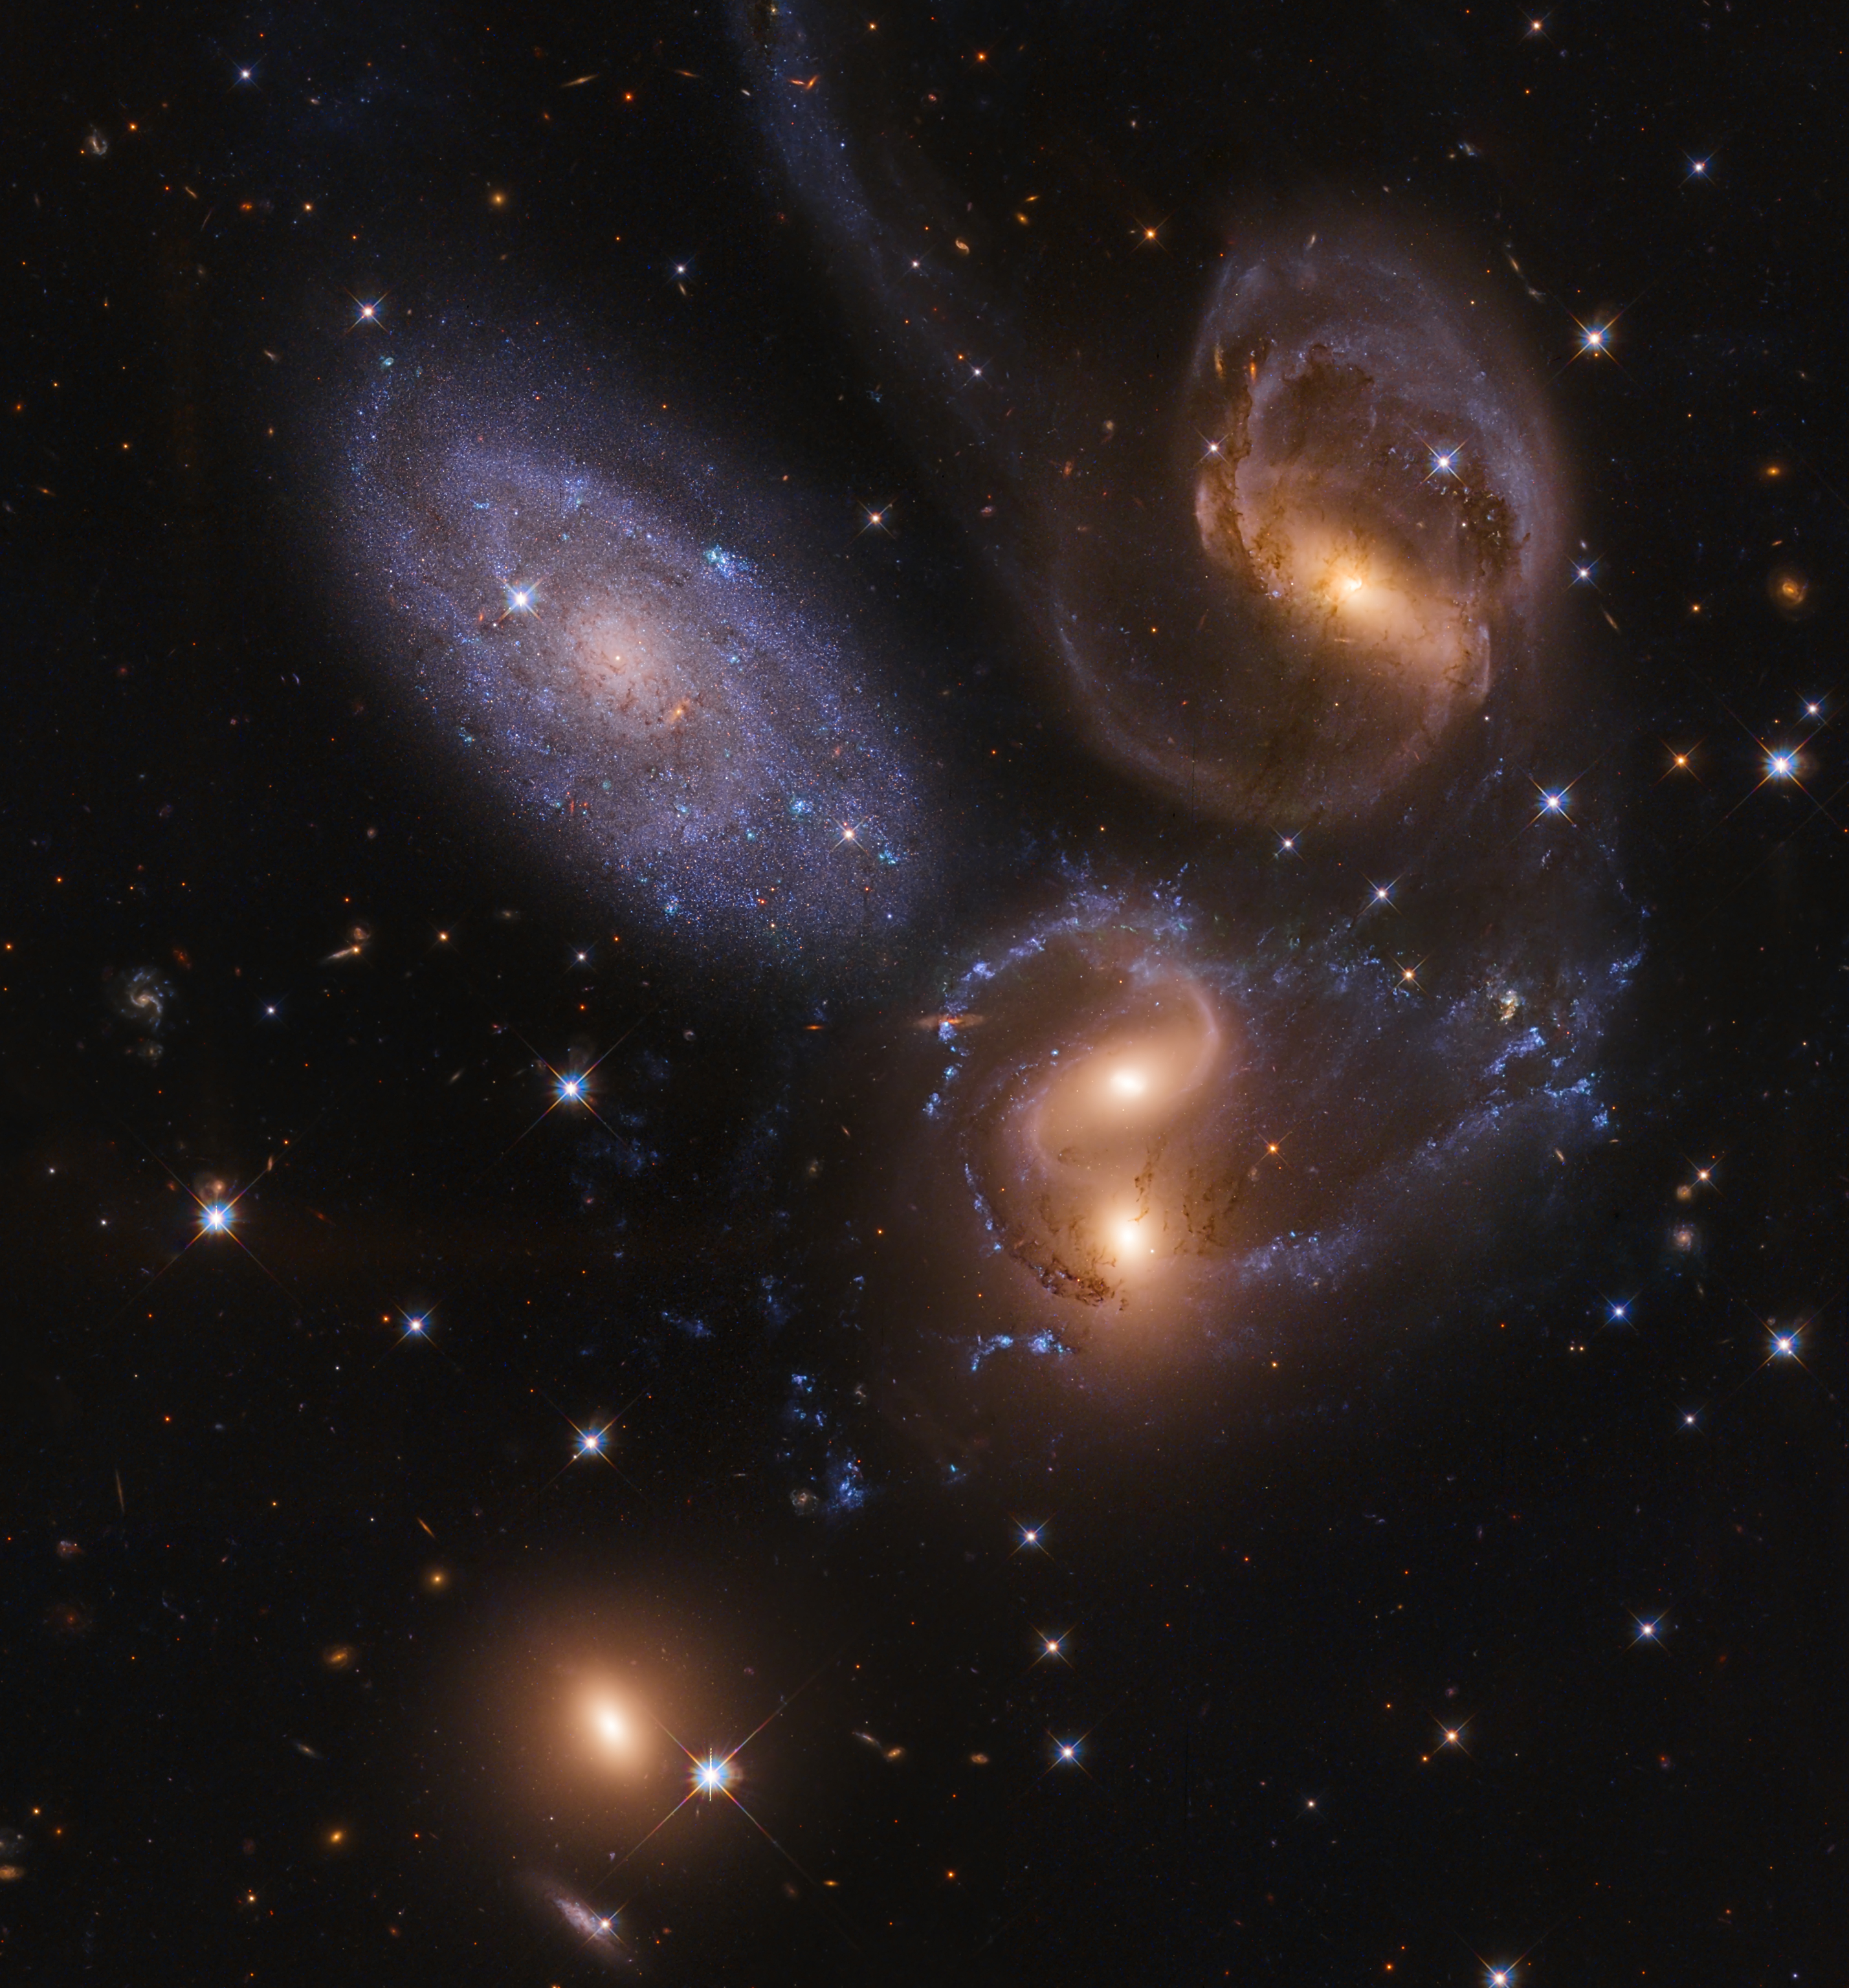 HUBBLE_NGC7318_PS2_CROP_INSIGHT3072.jpg